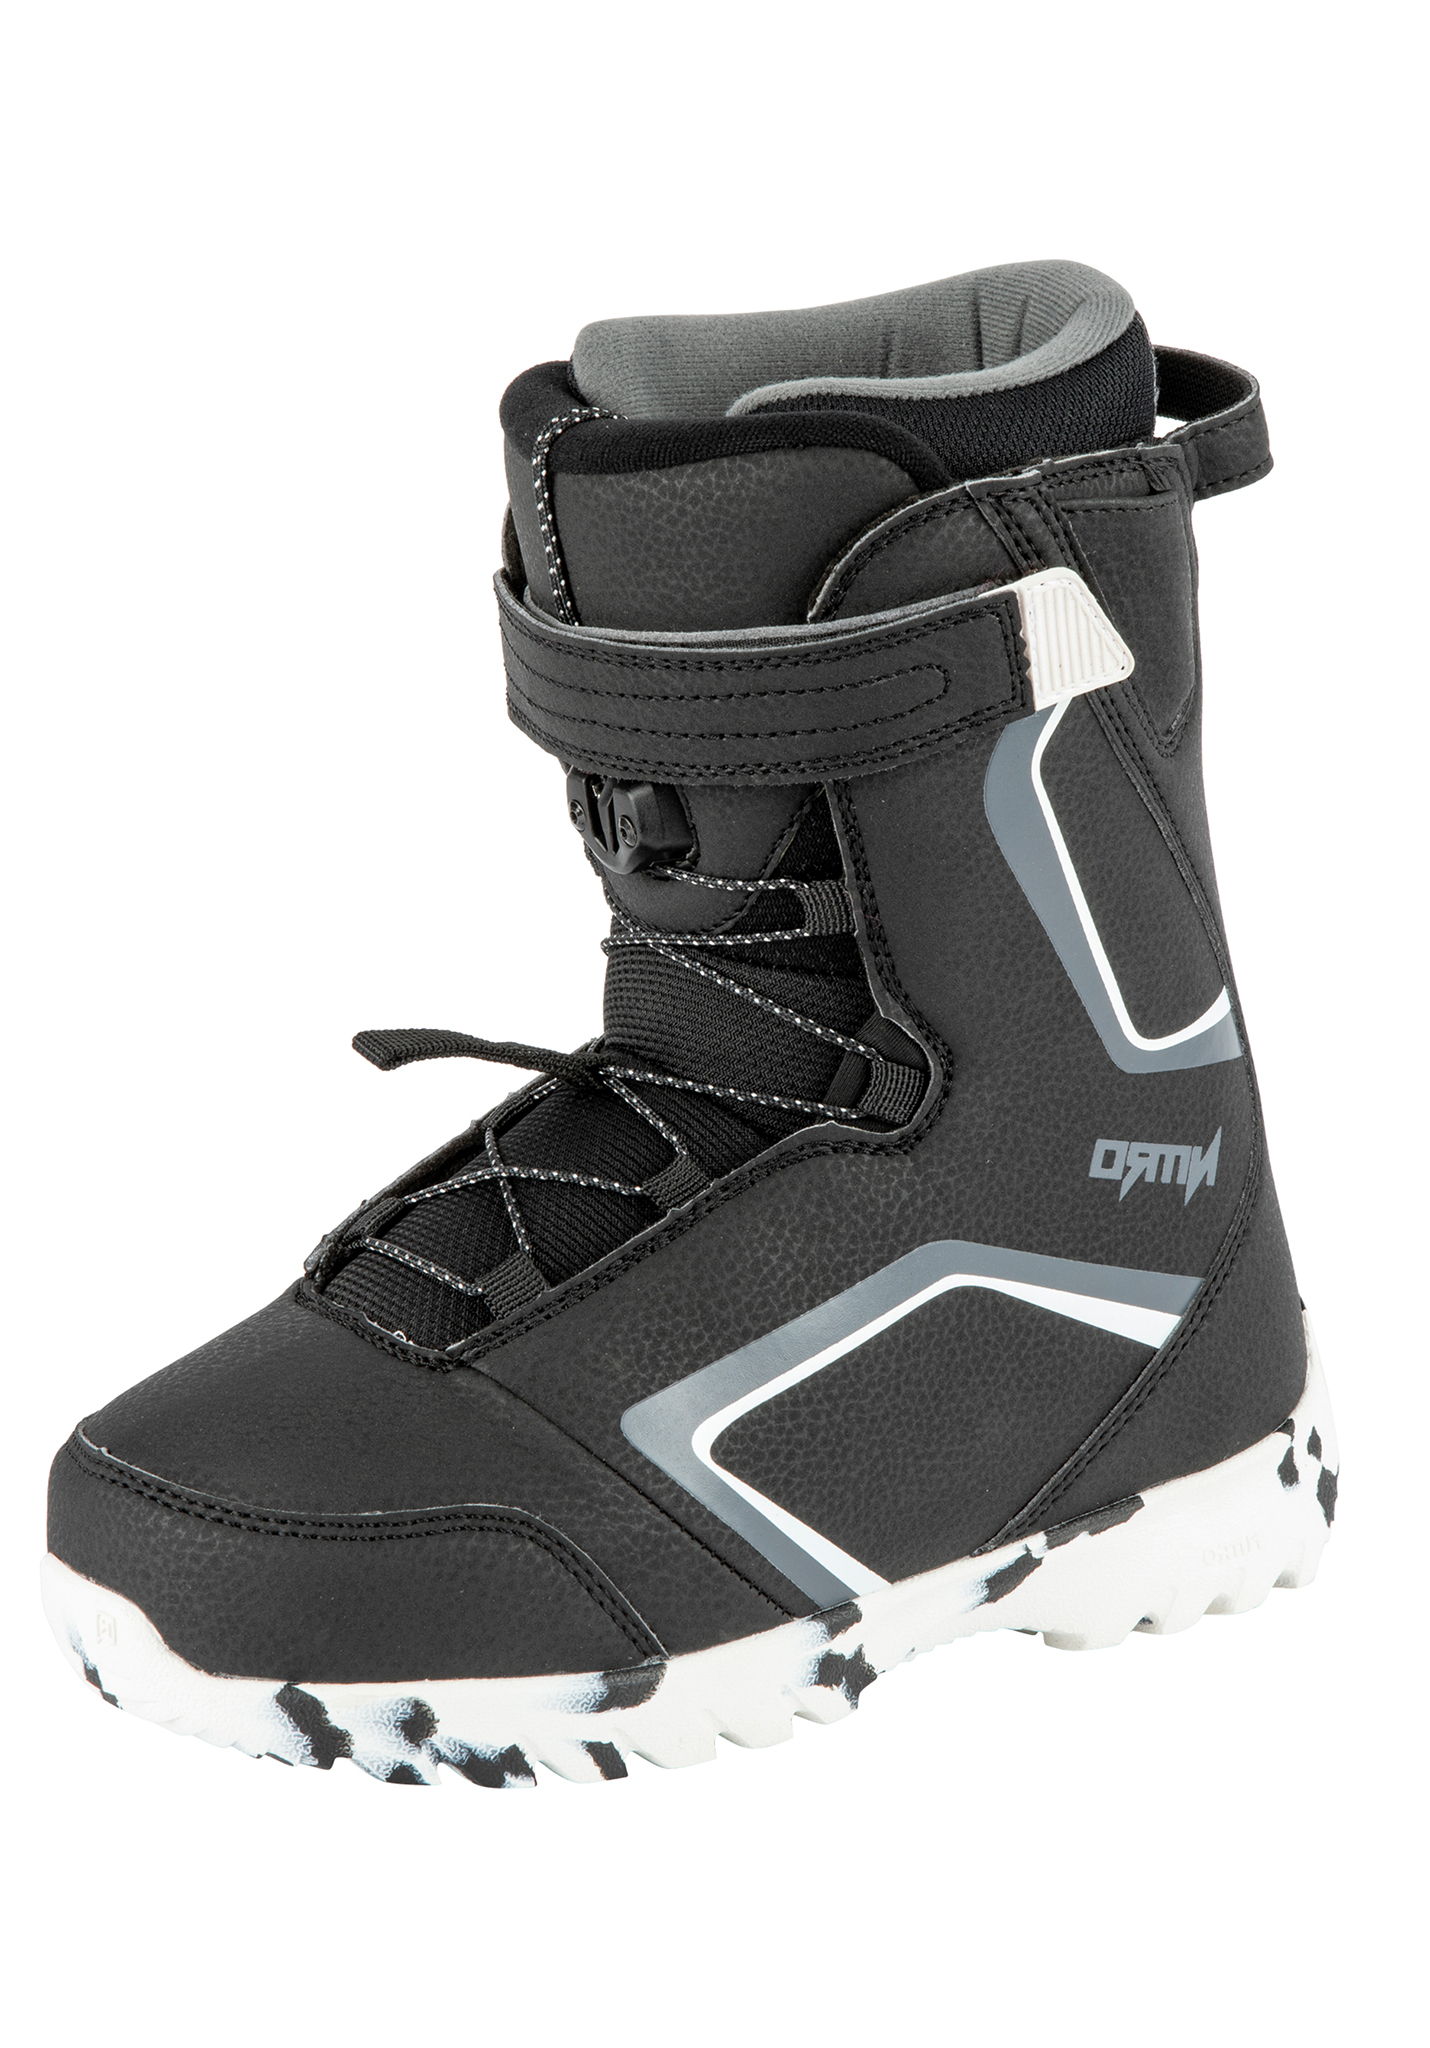 Nitro Droid QLS All Mountain Snowboard Boots schwarz-weiß-charcoal 34 2/3